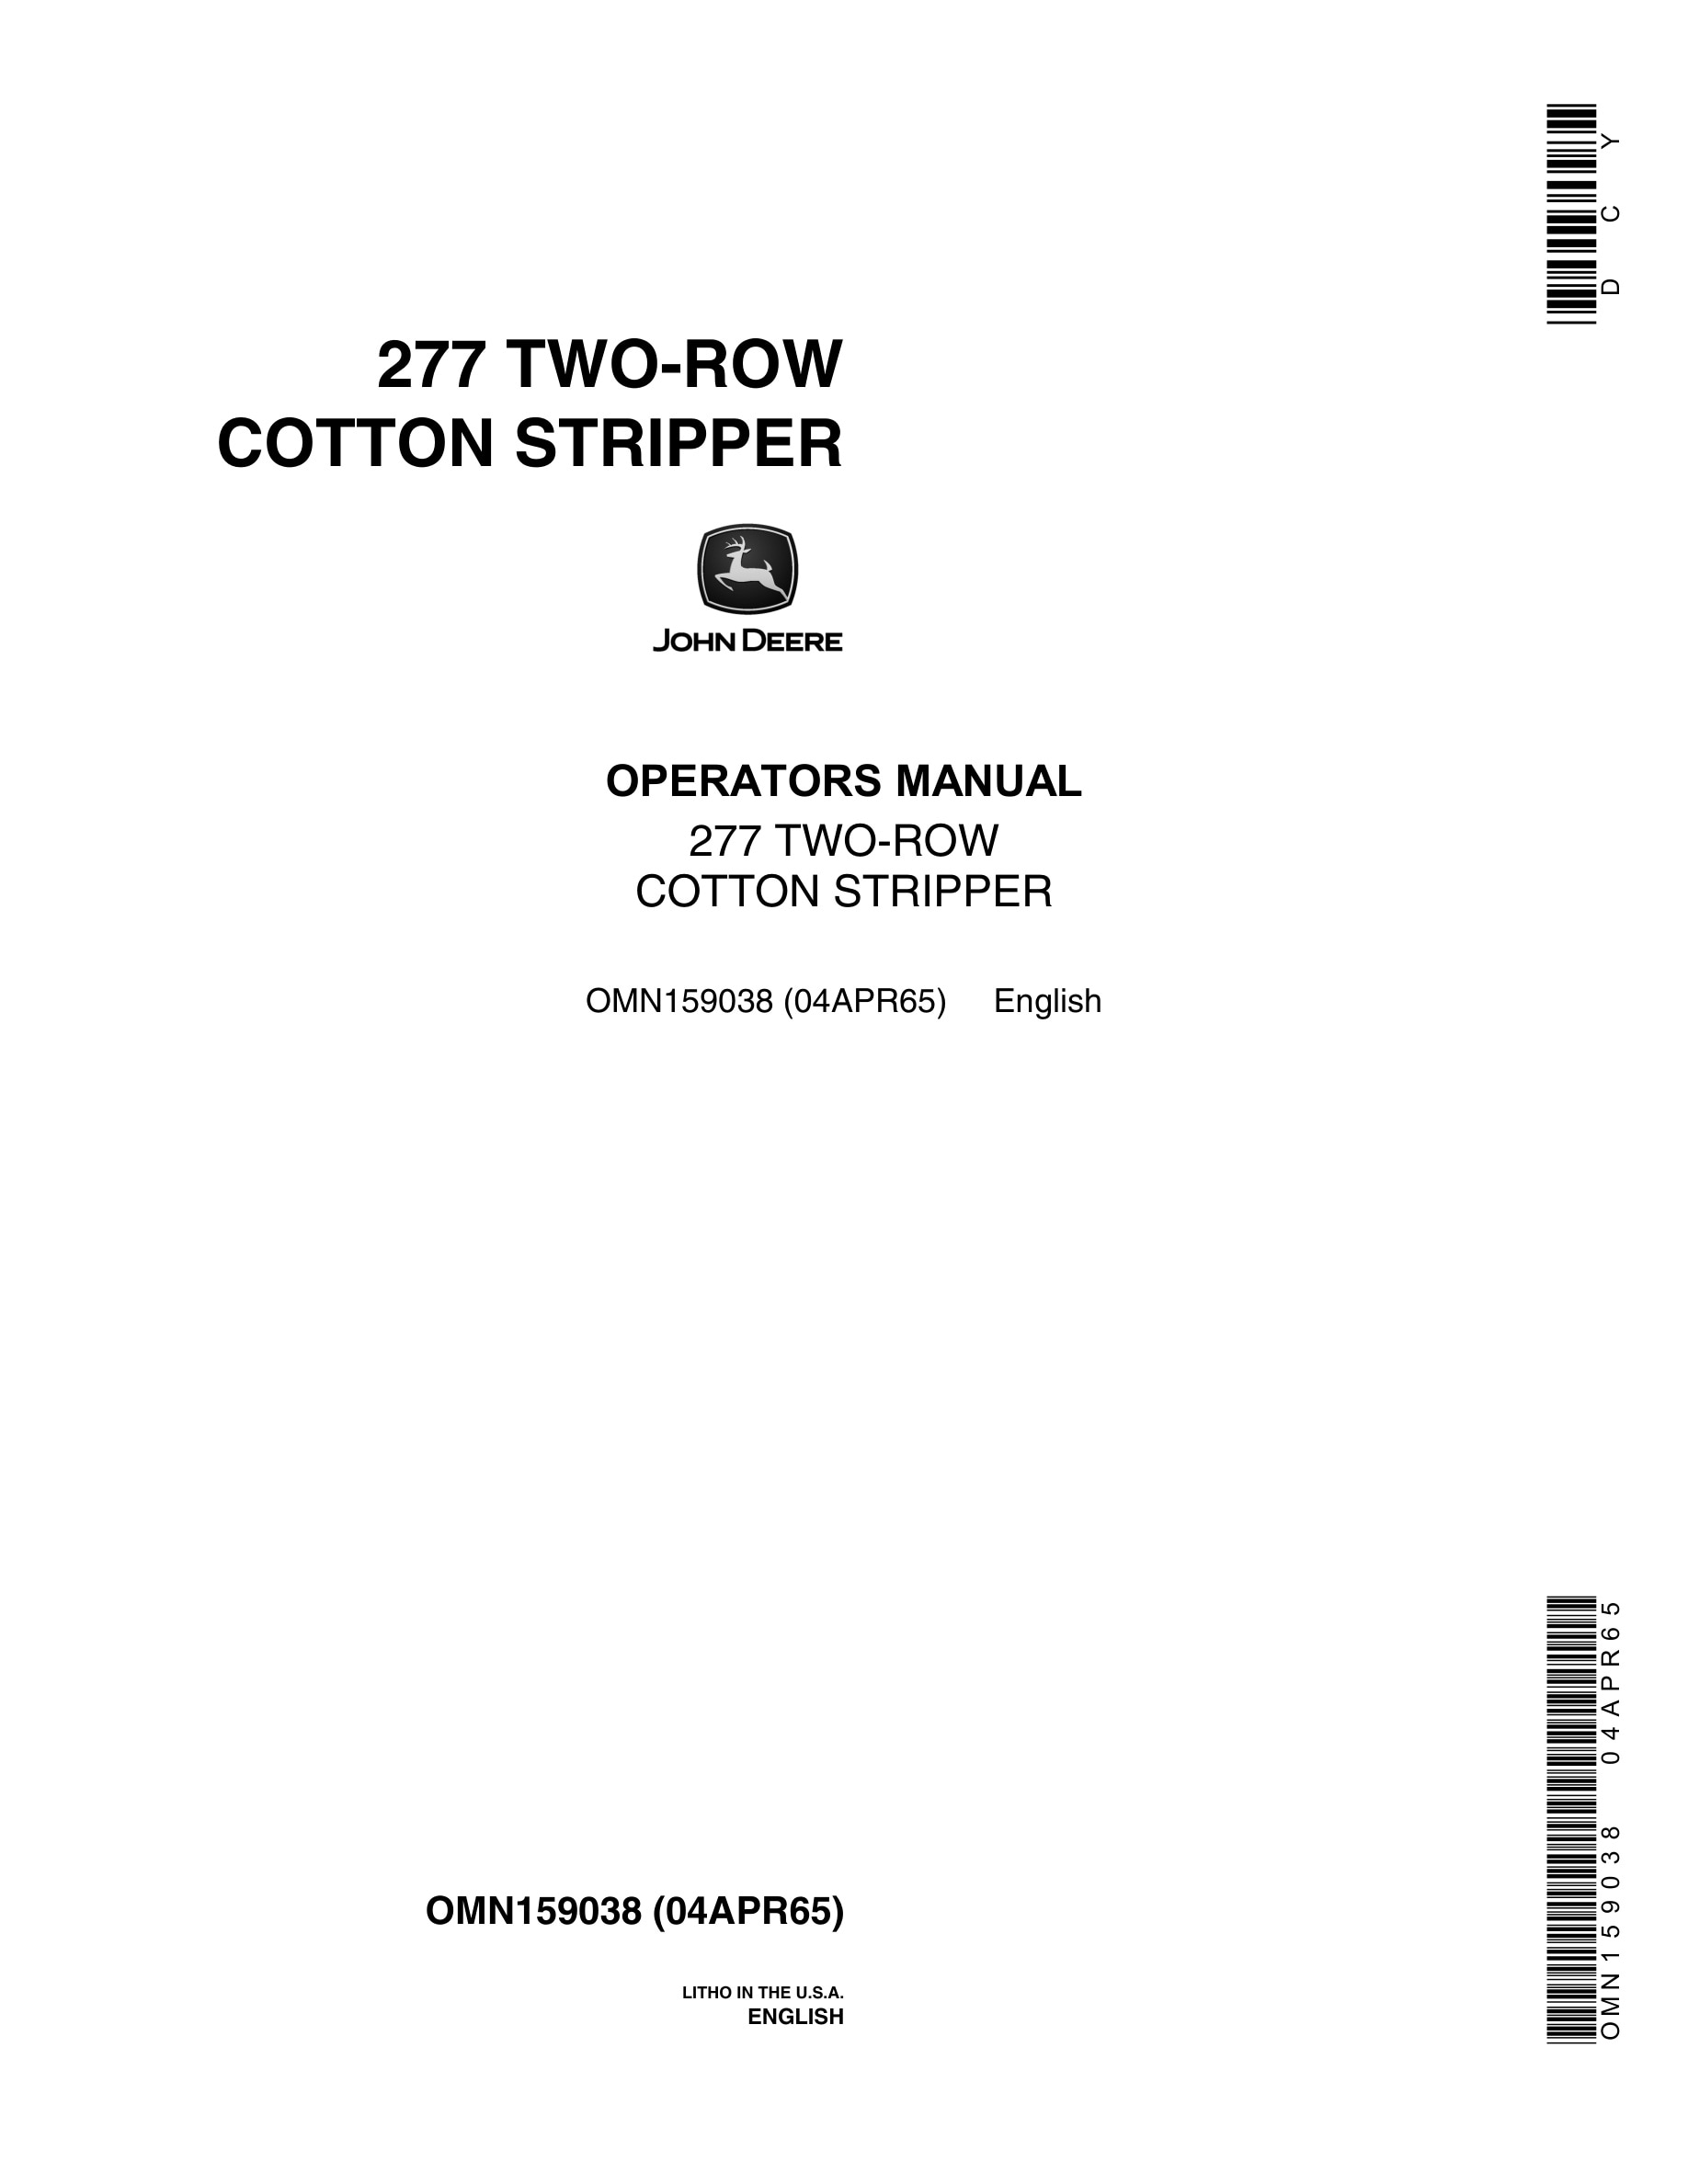 John Deere 277 Two Row Cotton Sripper Operator Manual OMN159038-1